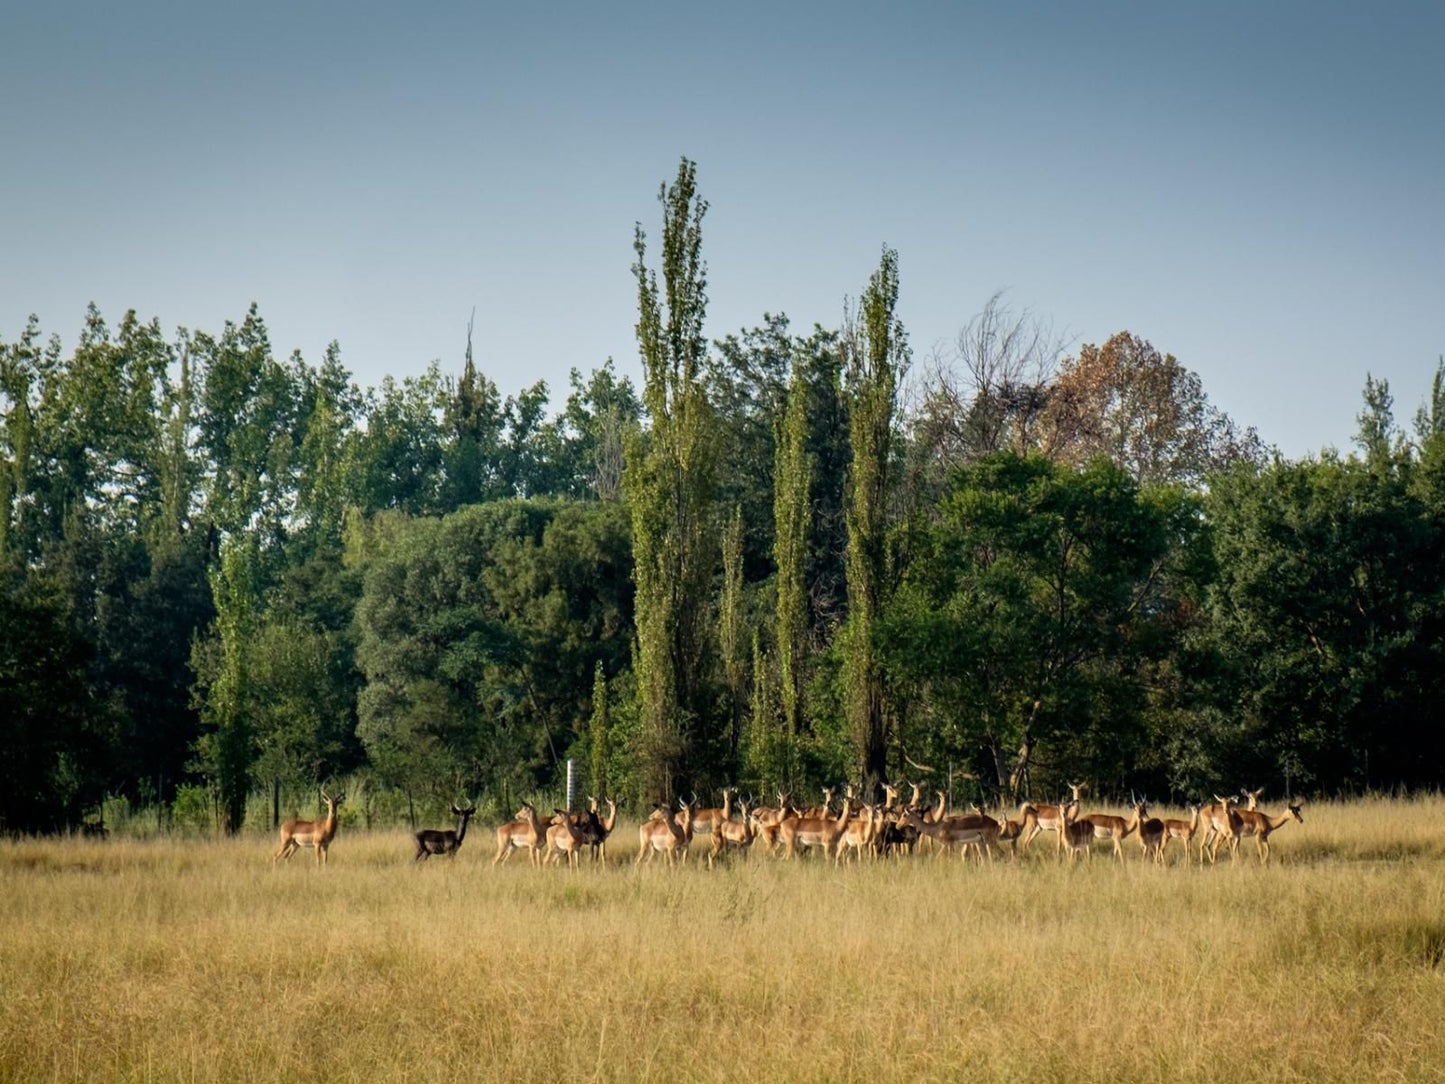 Guesthouse 56 Mooiplaats Pretoria Tshwane Gauteng South Africa Deer, Mammal, Animal, Herbivore, Lowland, Nature